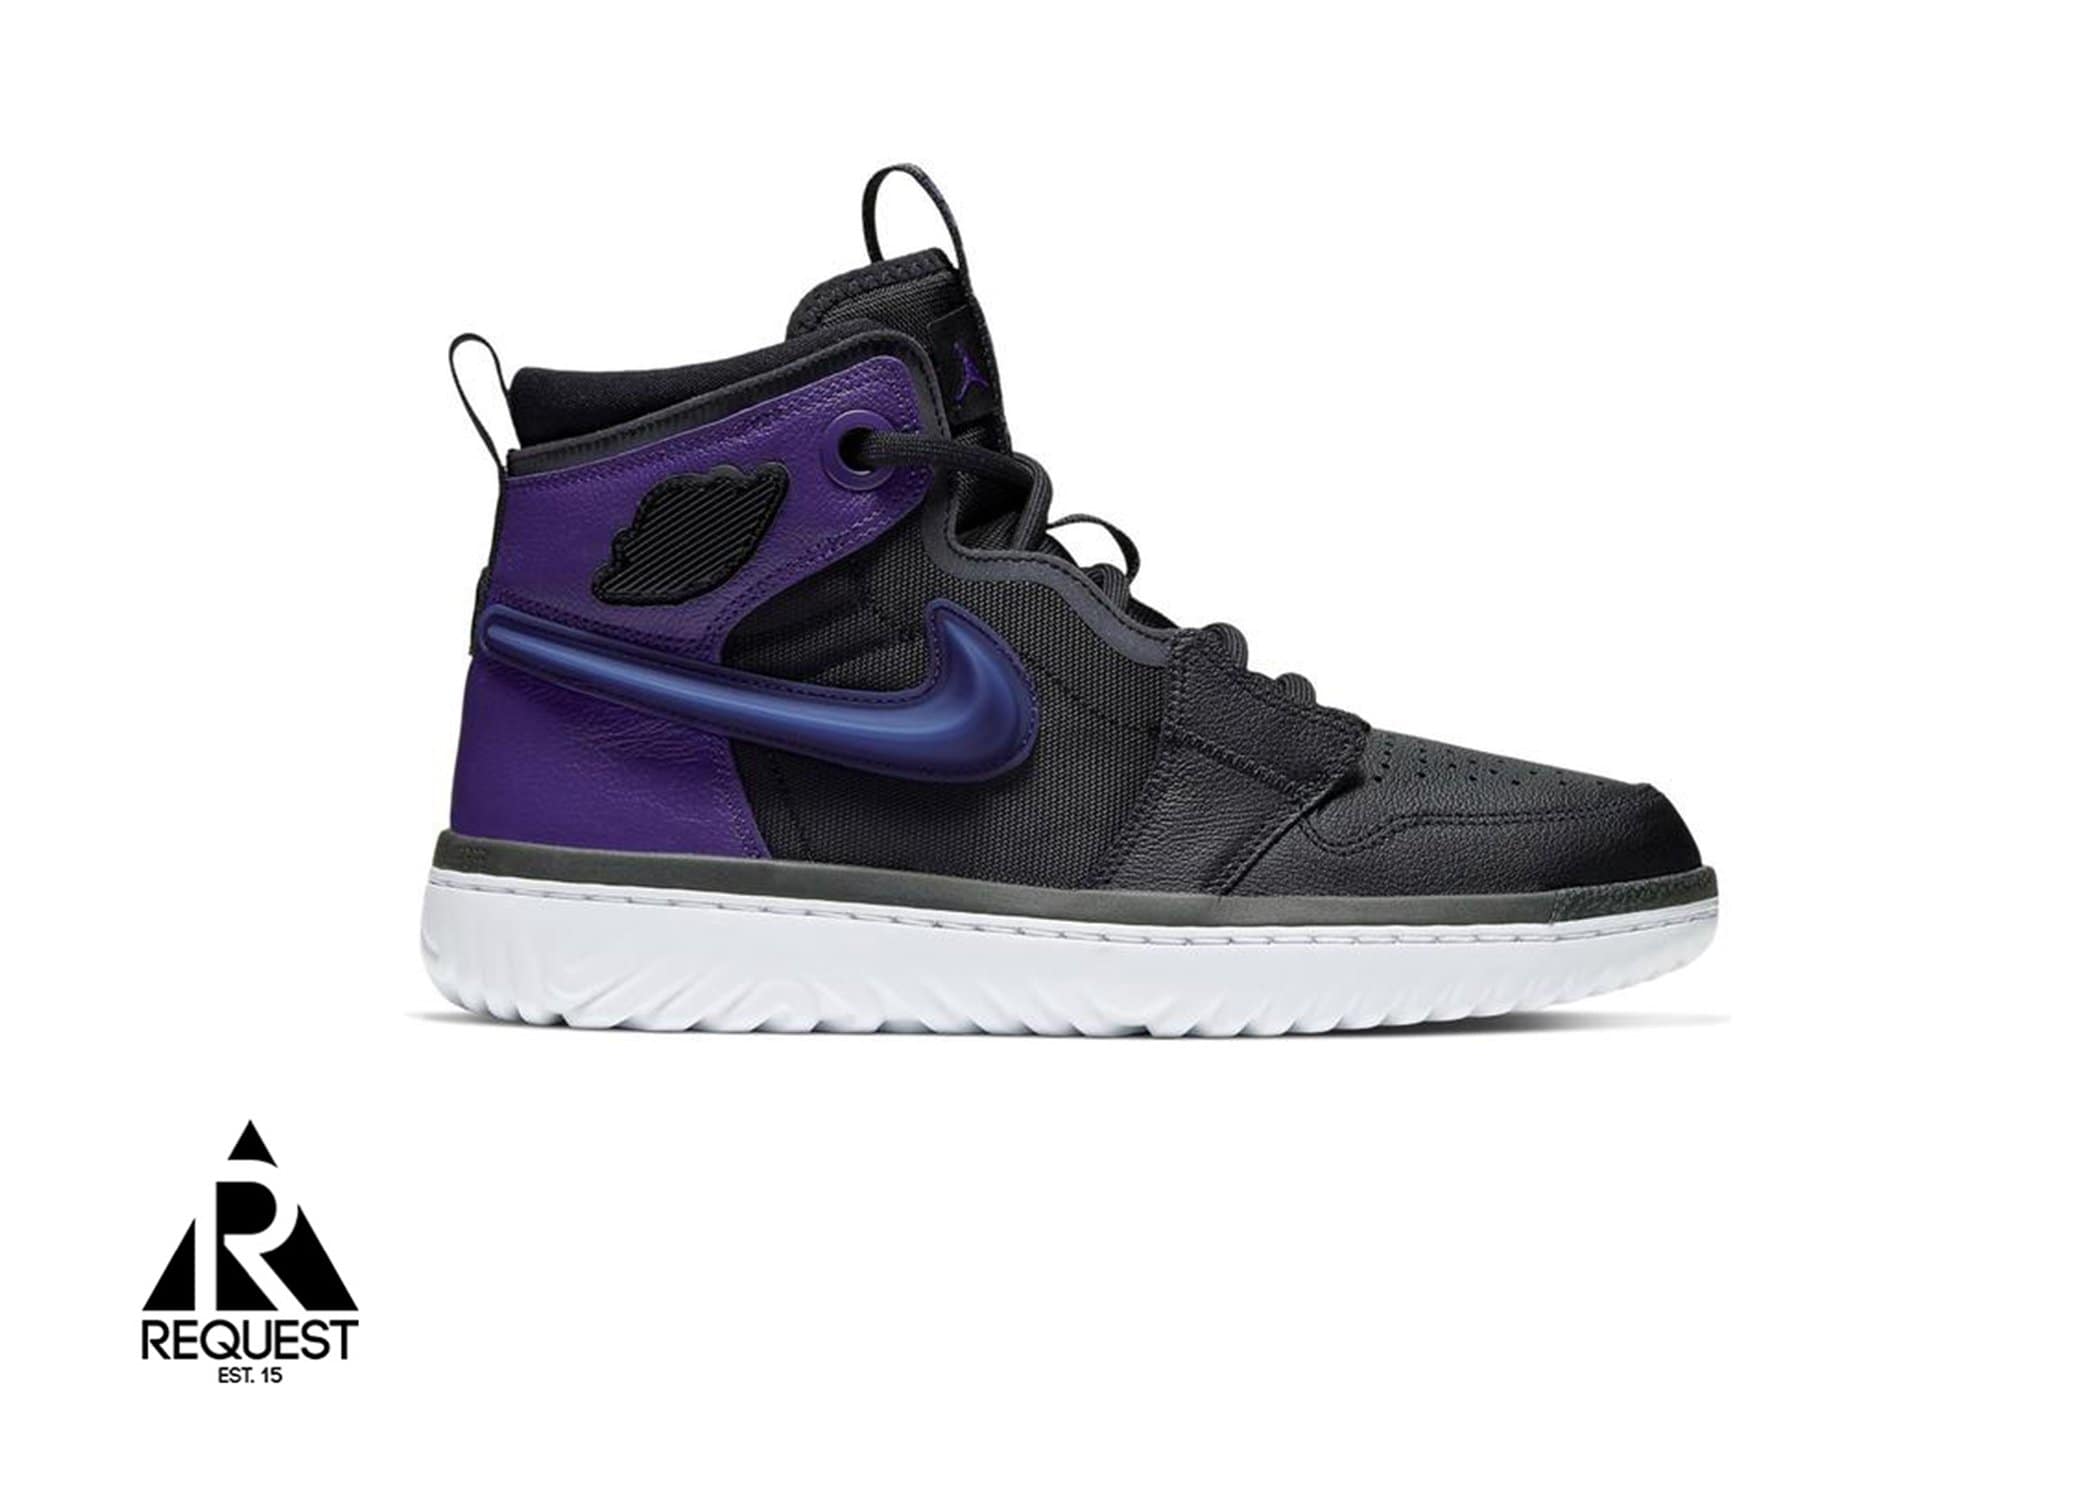 Air Jordan 1 Retro React “Black Court Purple“